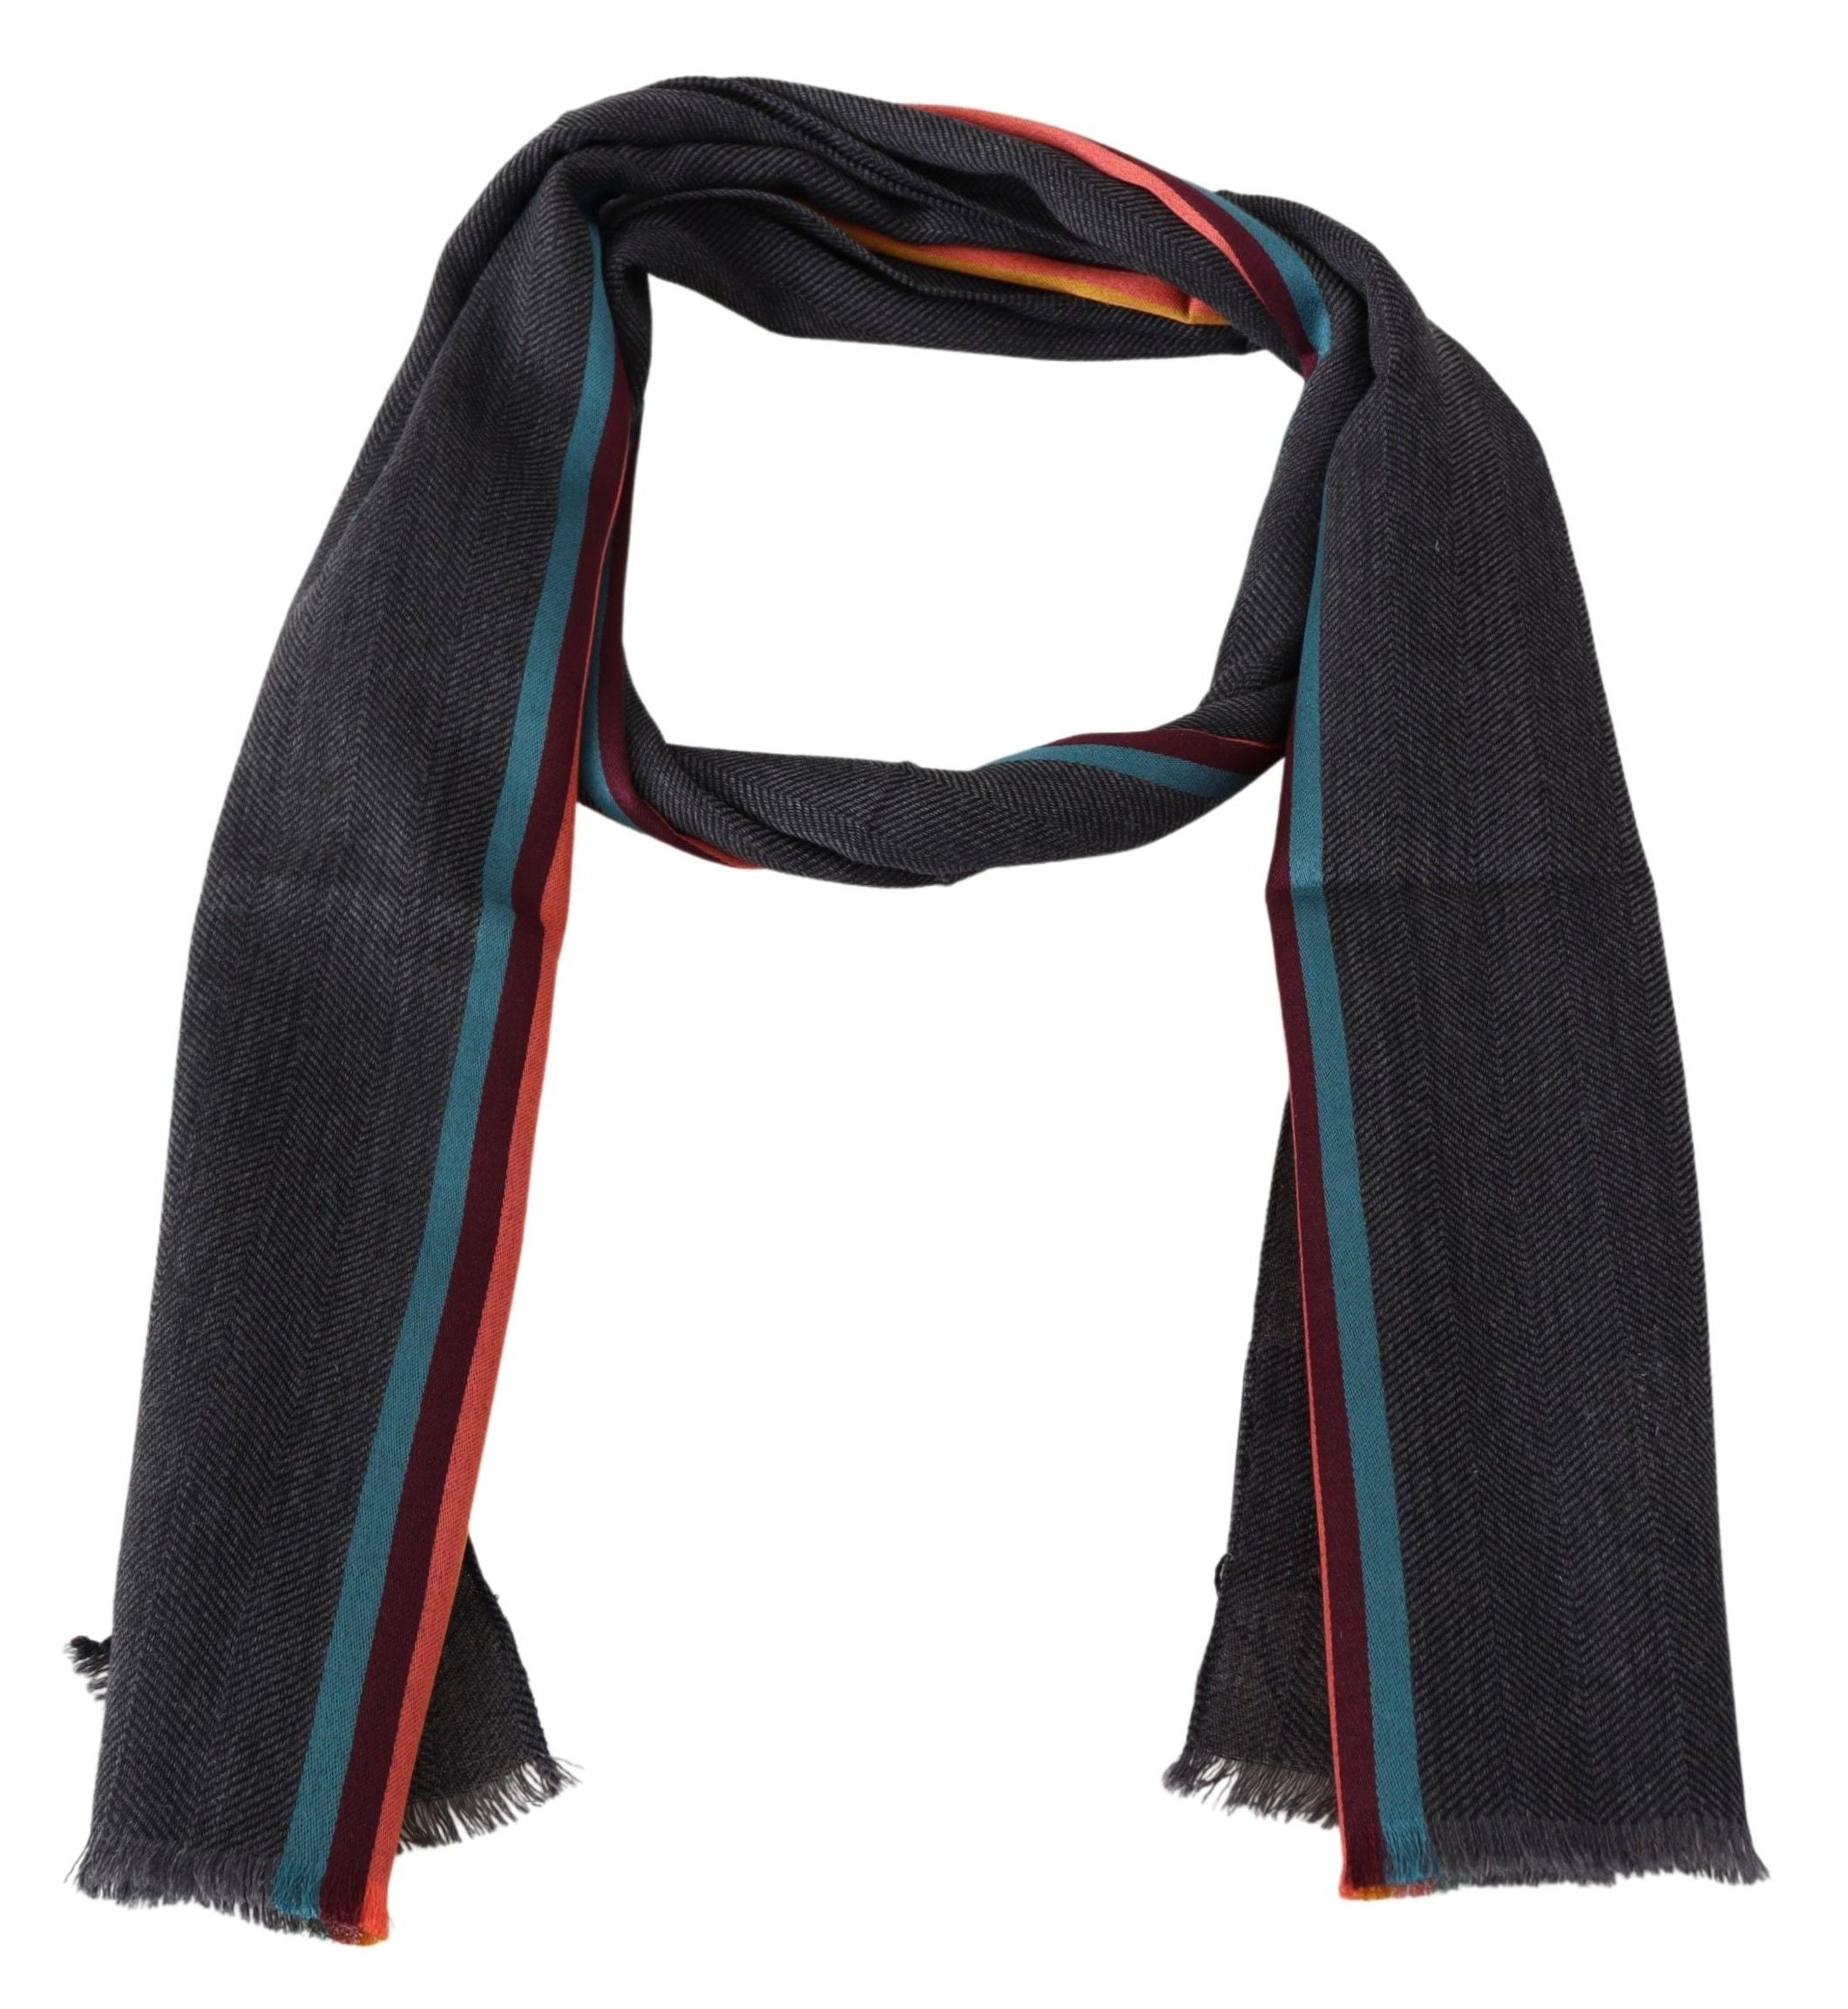 Missoni Elegant Wool-Silk Blend Striped Scarf